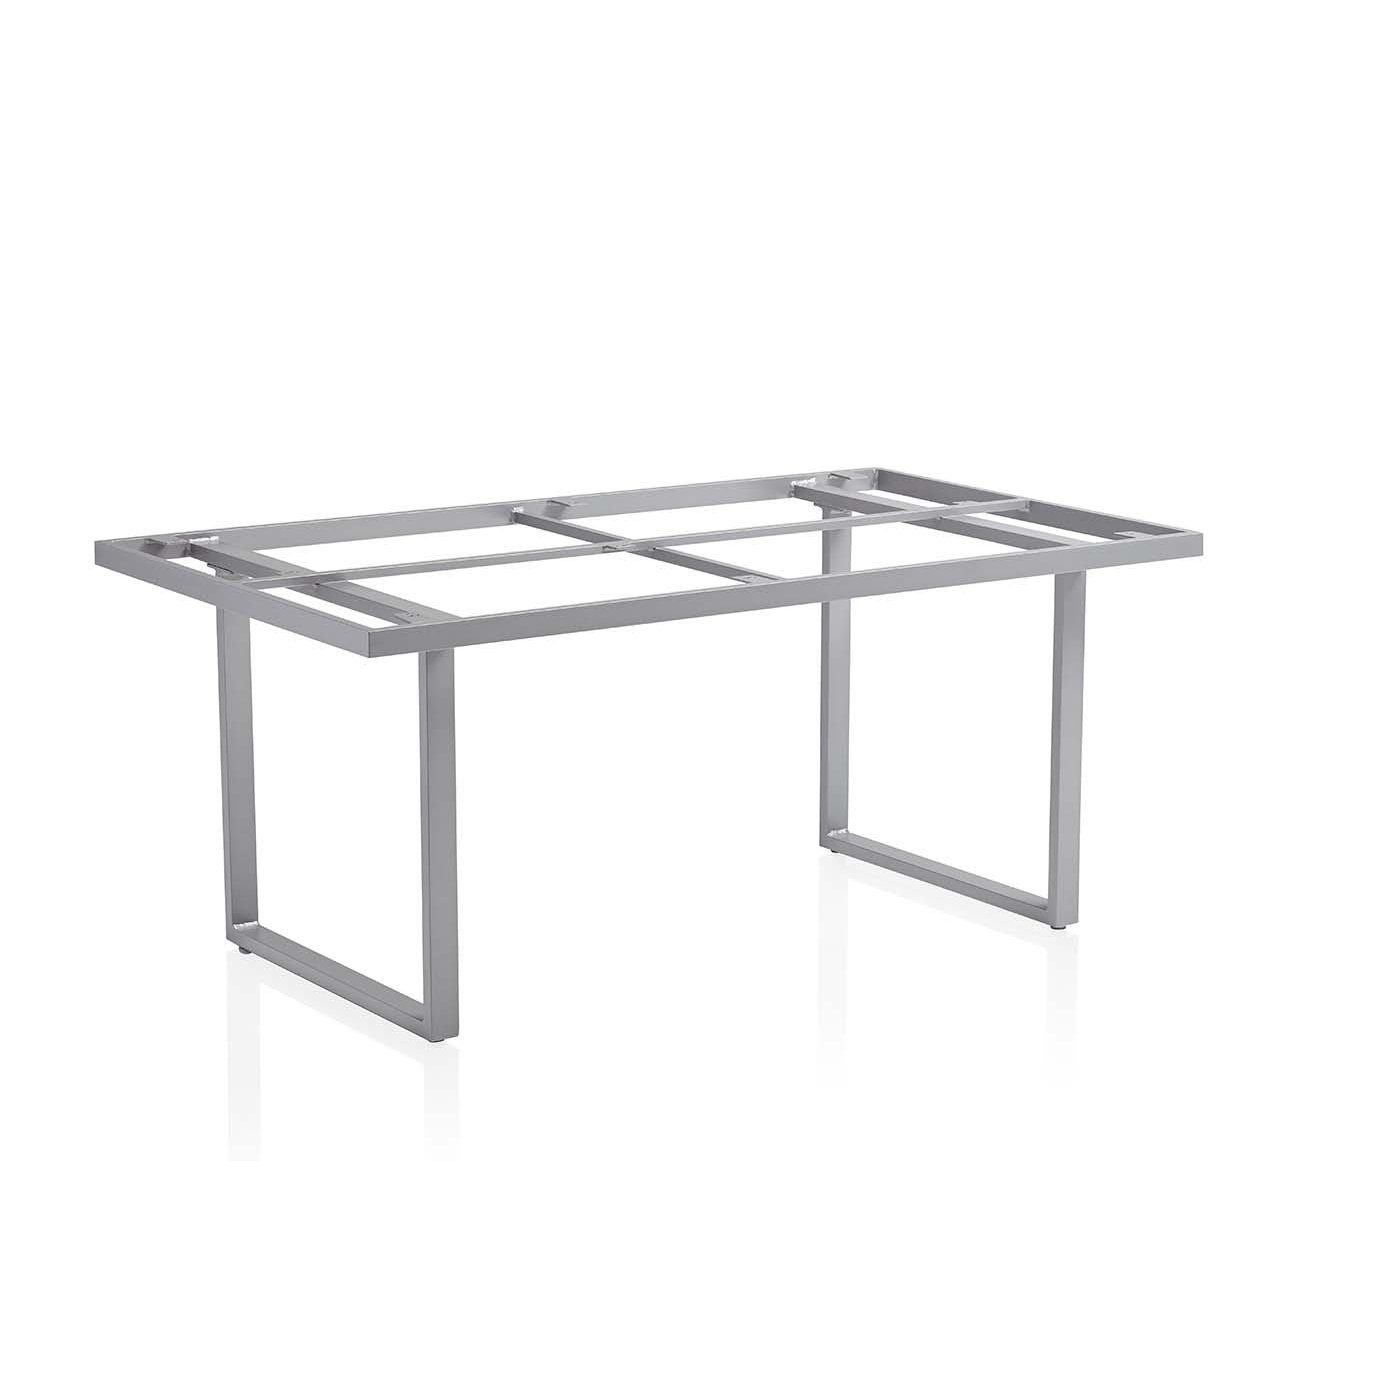 Kettler "Skate" Tischgestell, Casual Dining, Aluminium silber, 160x95 cm